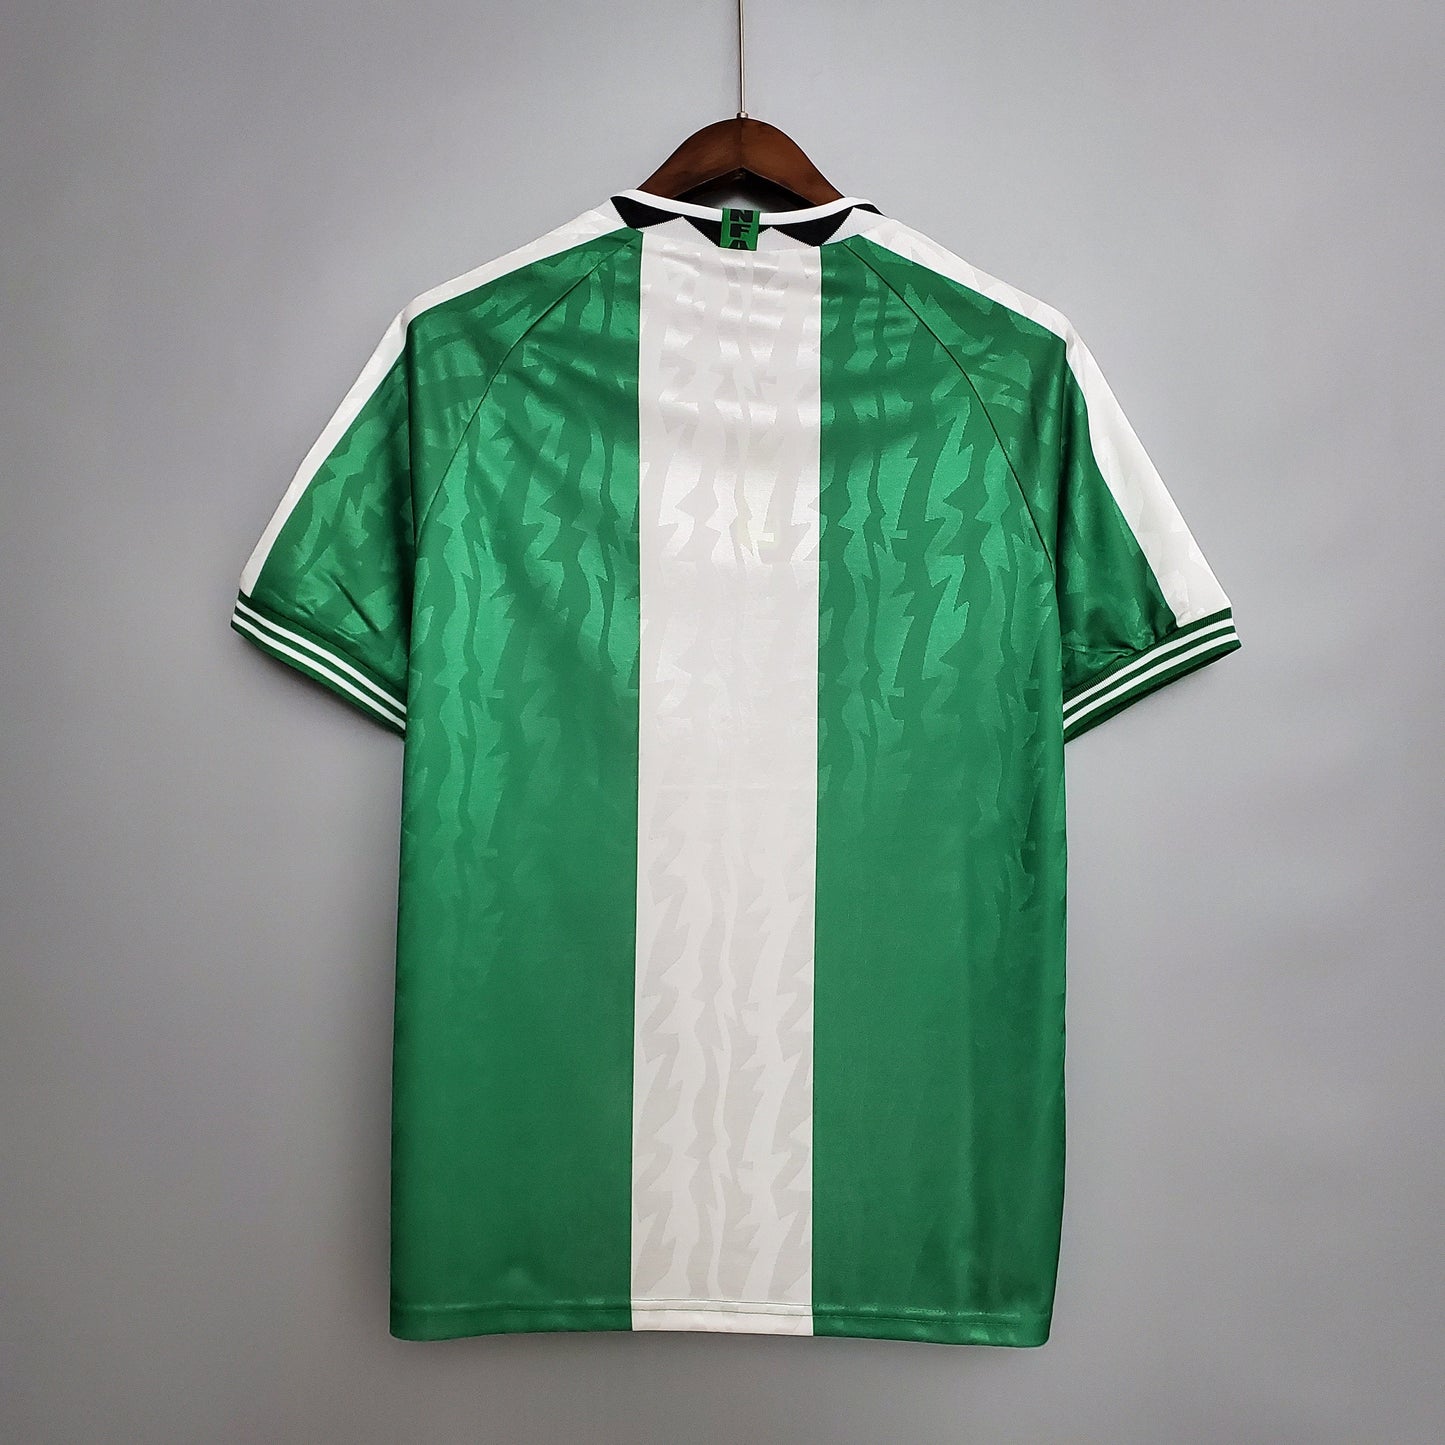 Nigeria 1996 Retro Jersey Shirt Kit